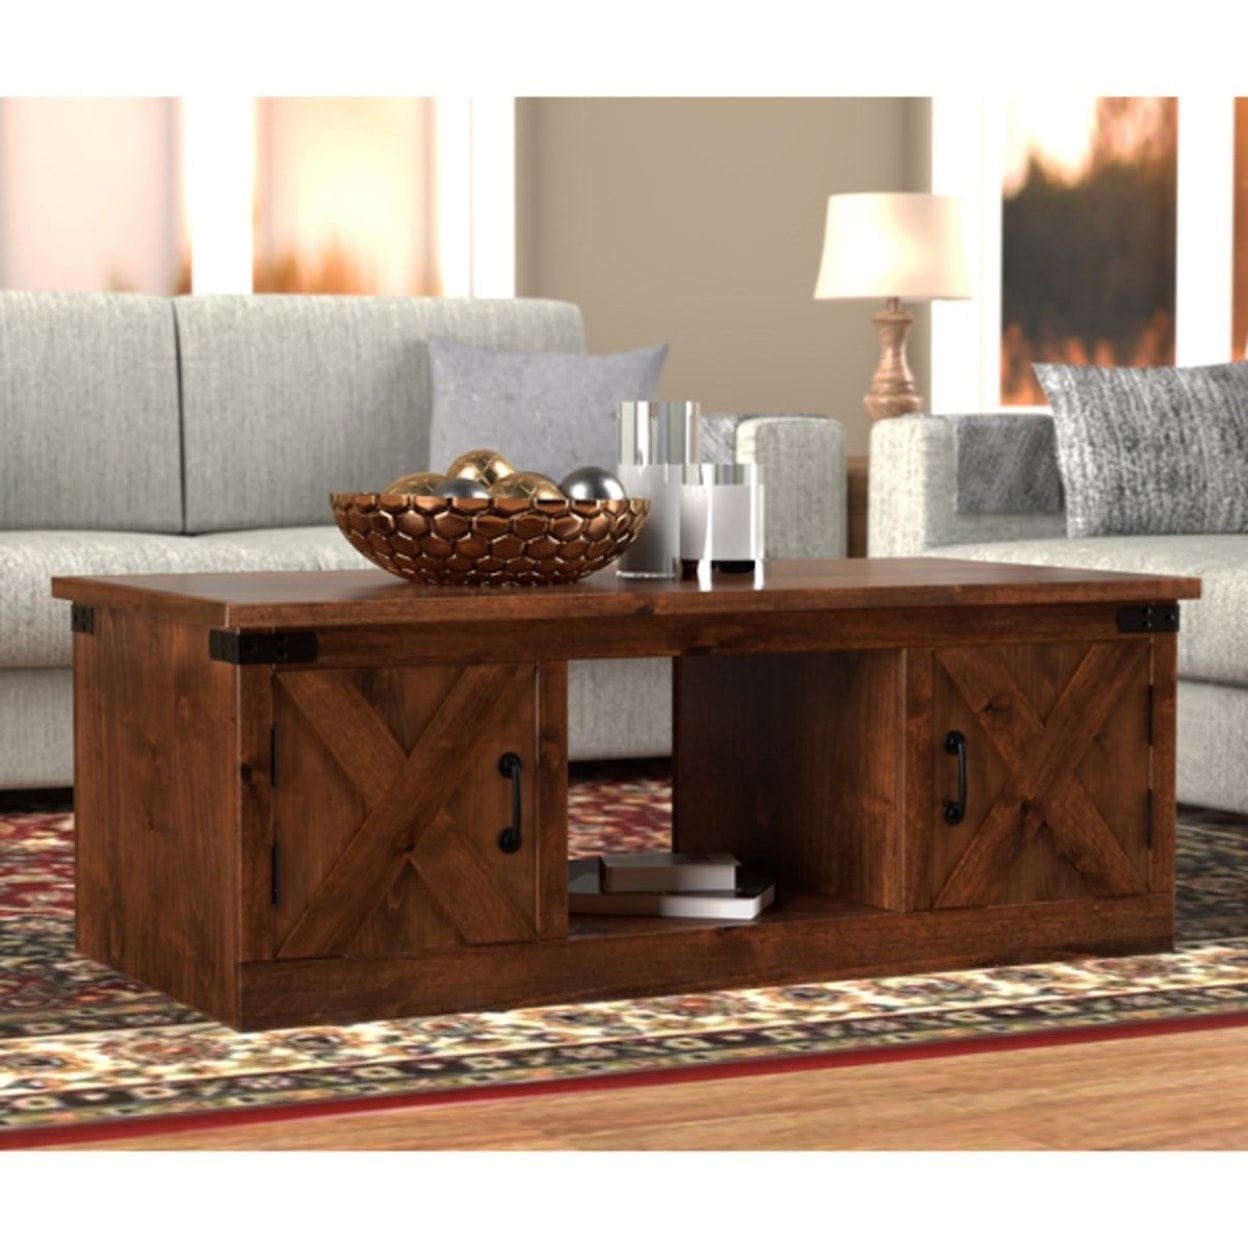 Legends Furniture Farmhouse Coffee Table